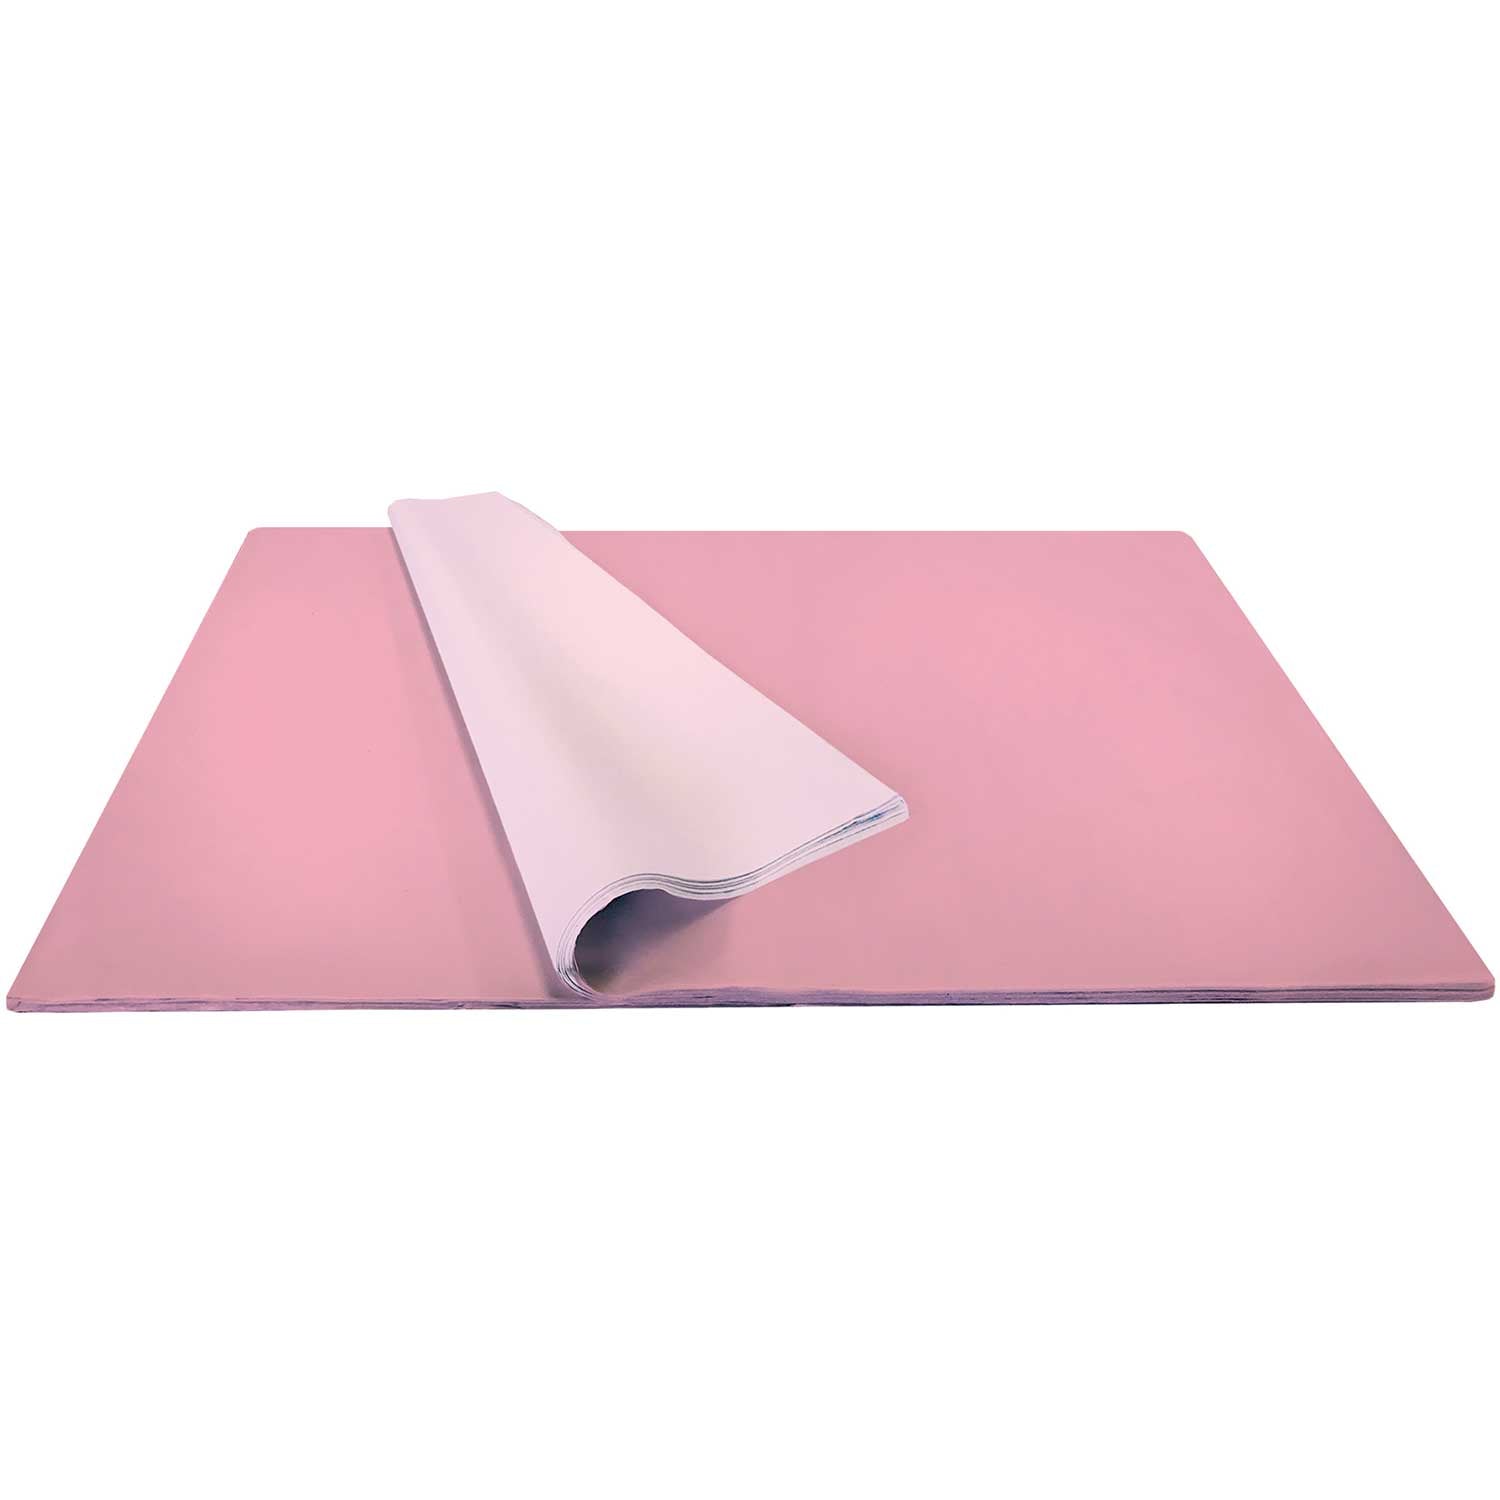 Jillson & Roberts Bulk Gift Wrap, Matte Solid Pastel Pink, Full Ream 833' x 24 inch